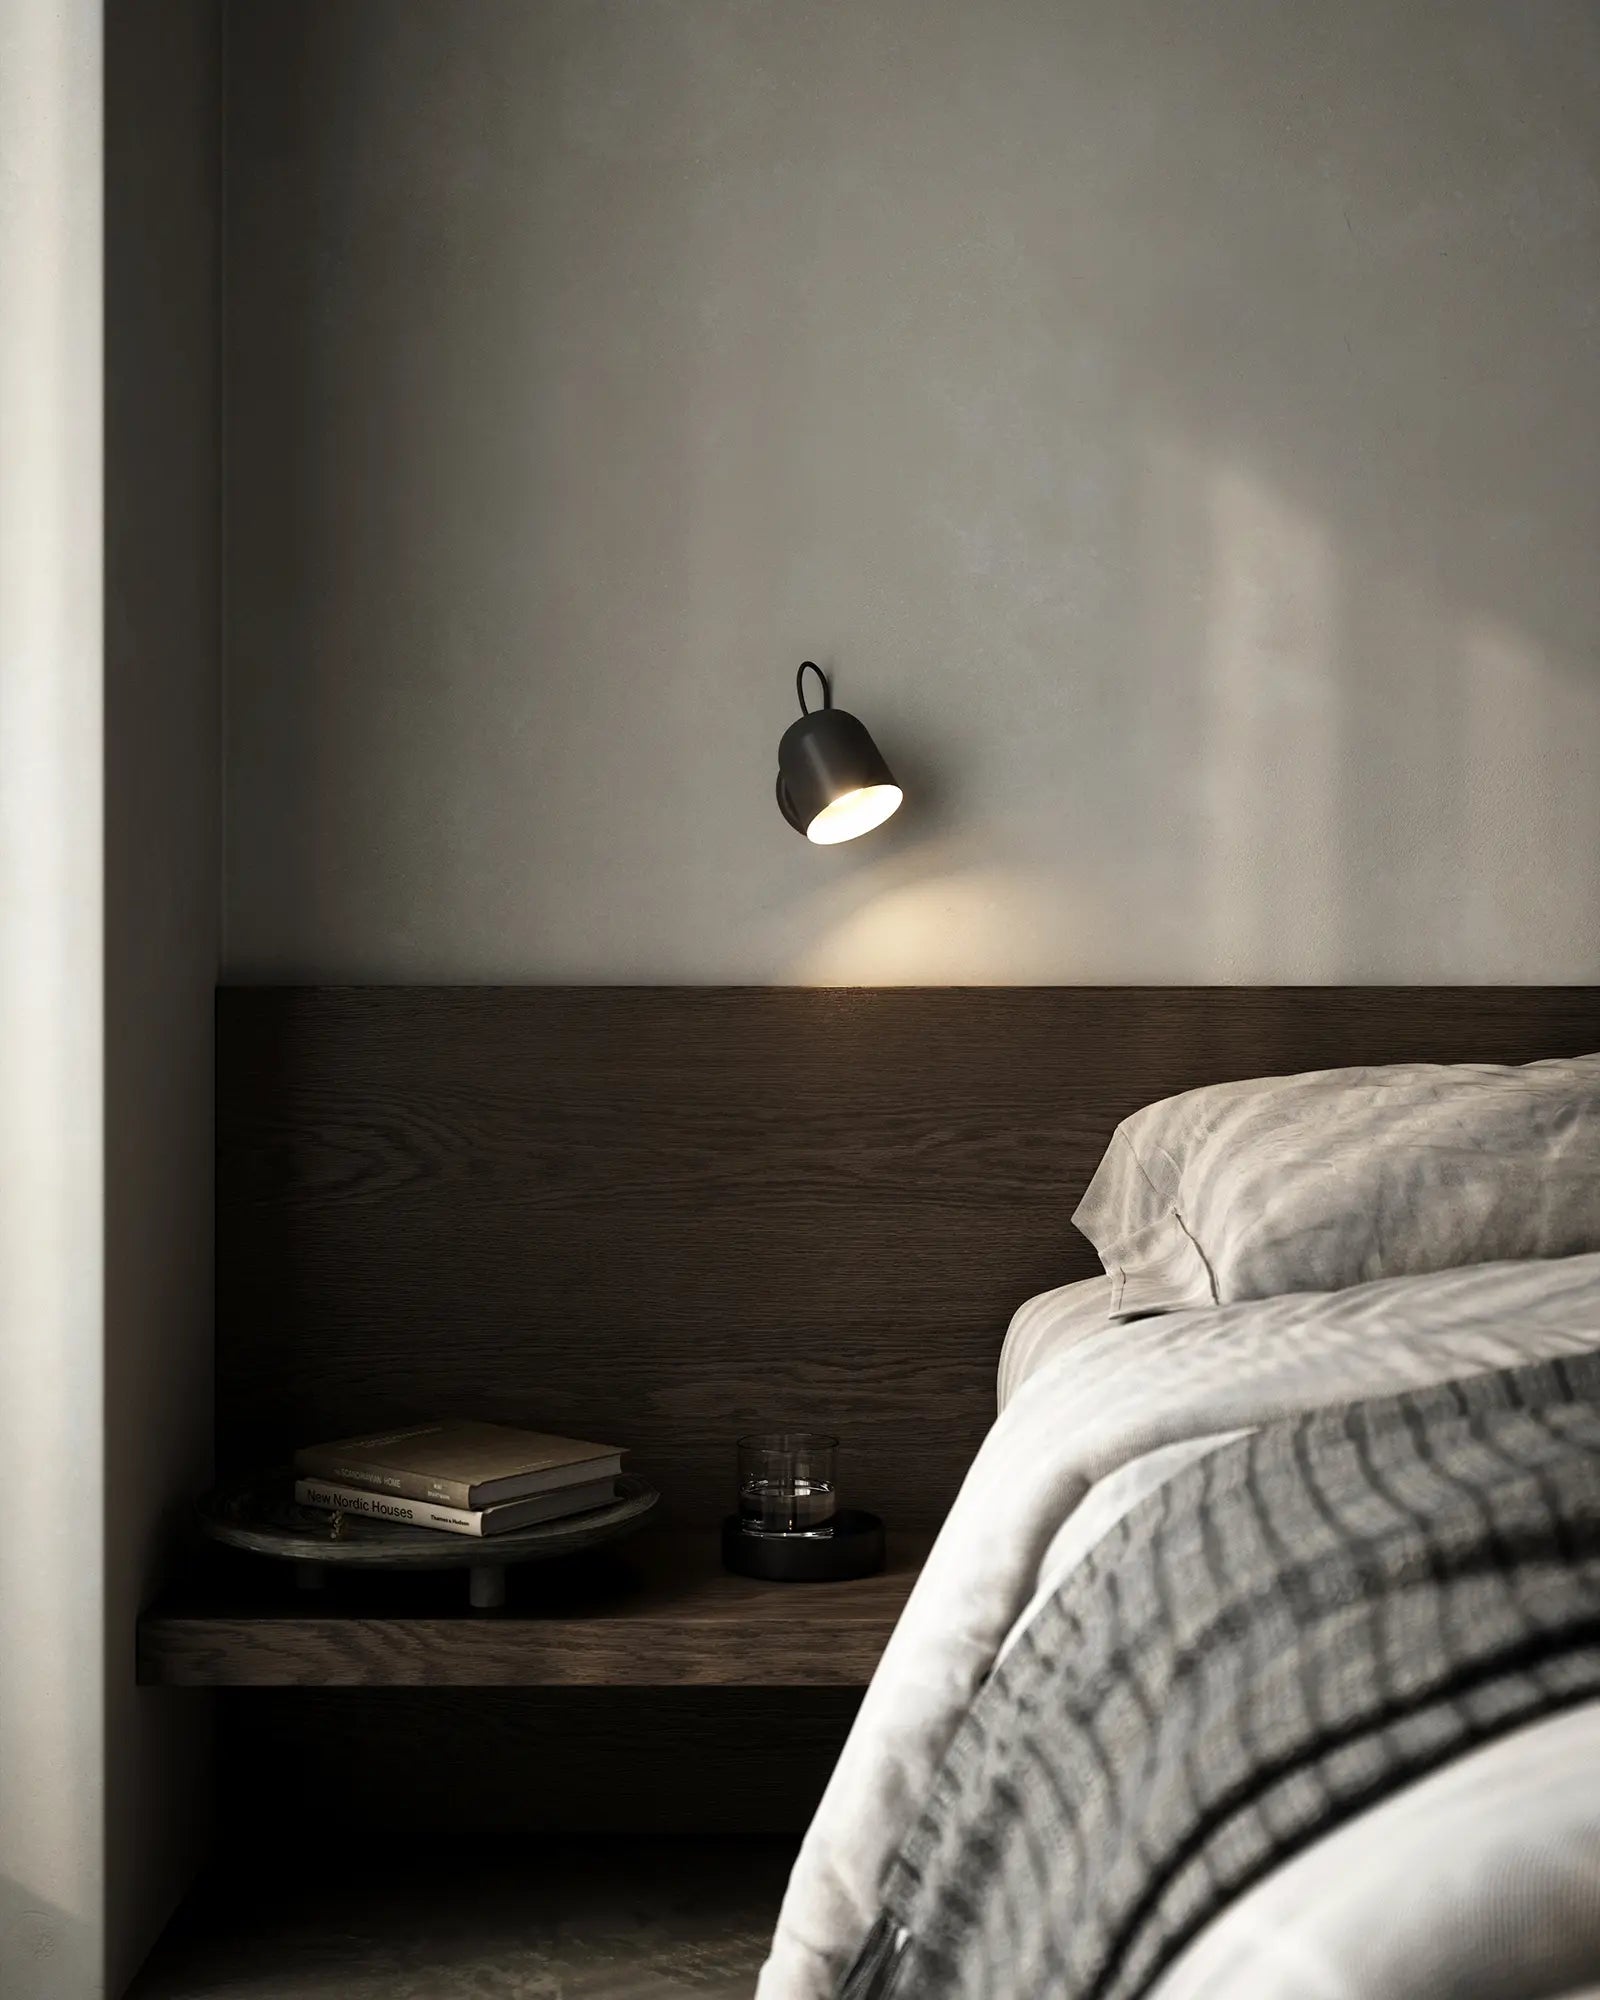 Angle adjustable Scandinavian wall light on the bed side